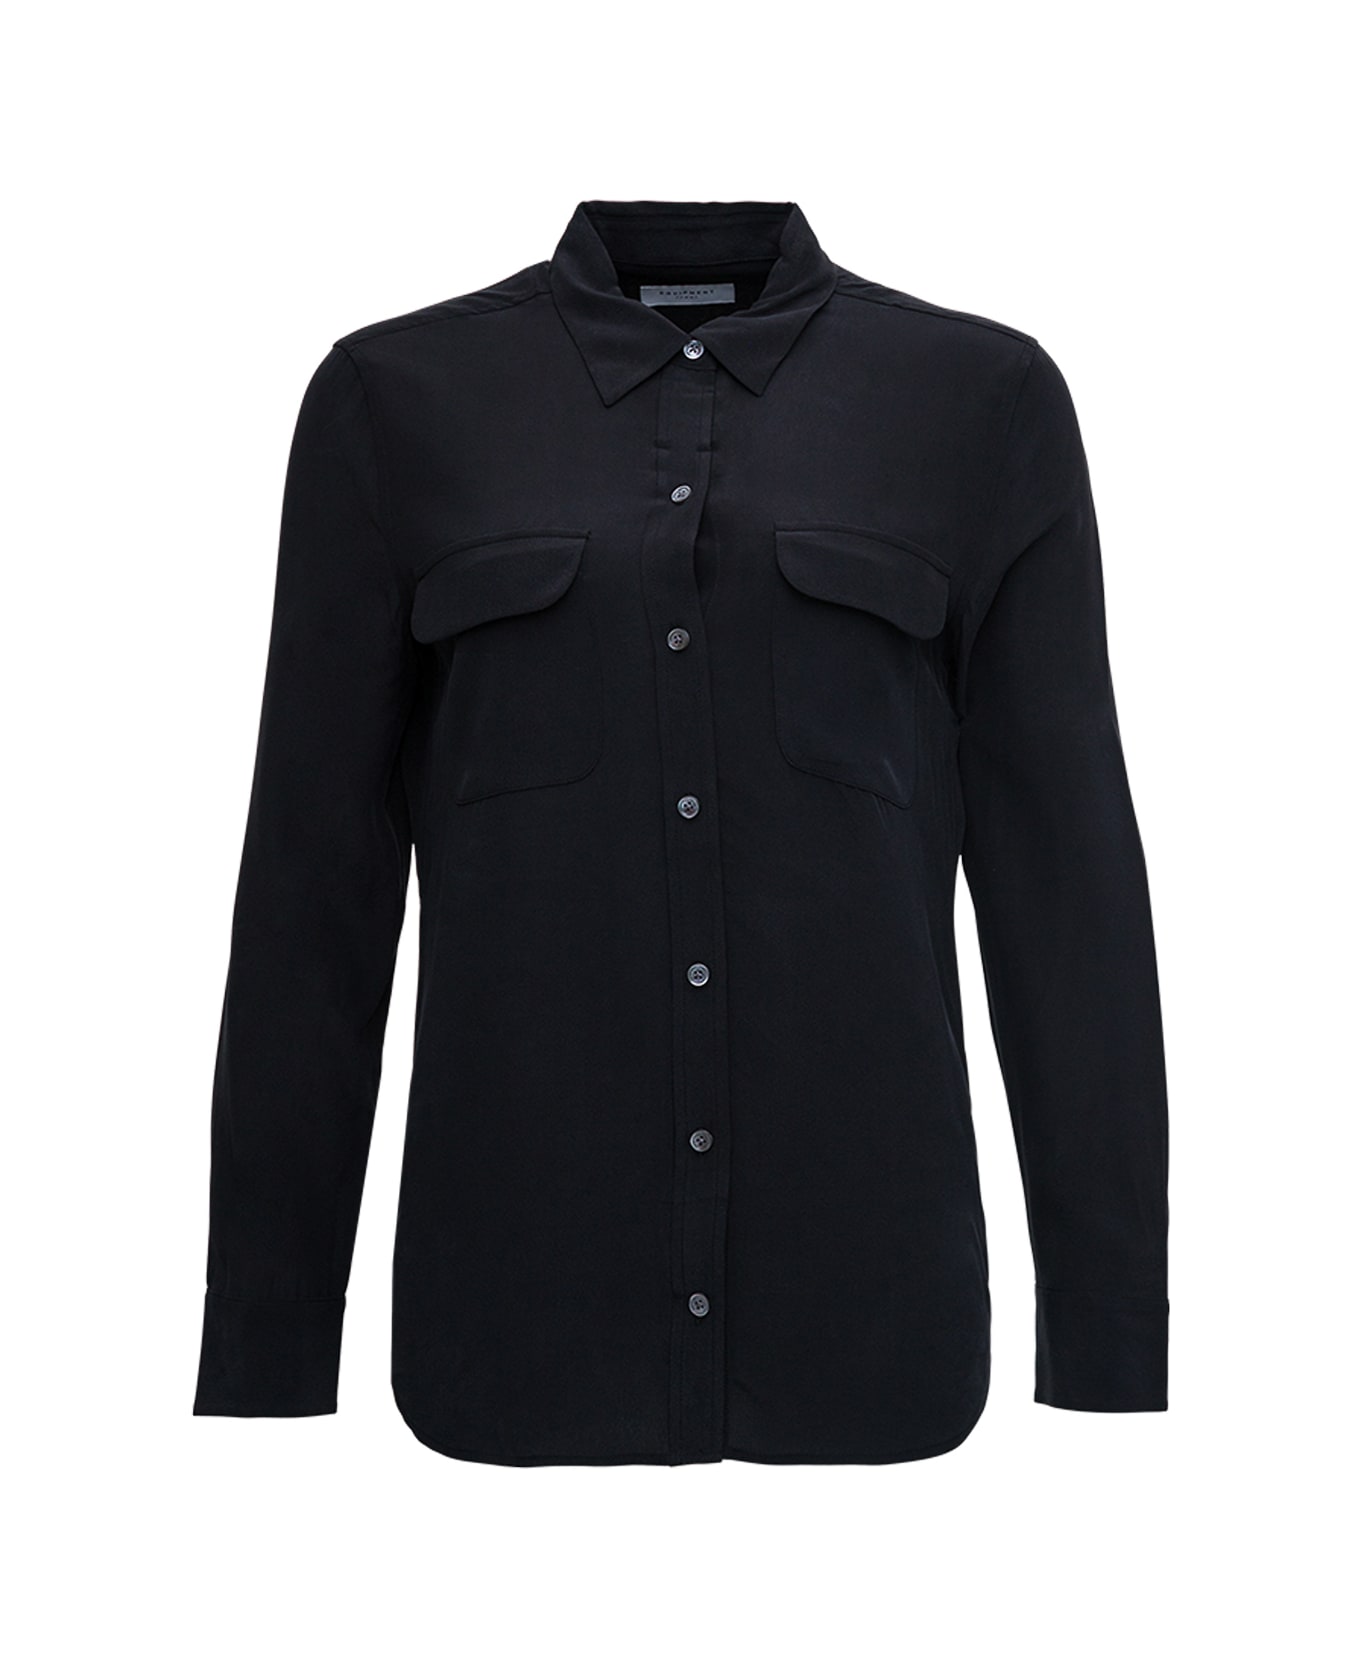 Equipment Black Silk Shirt With Pockets - Nero